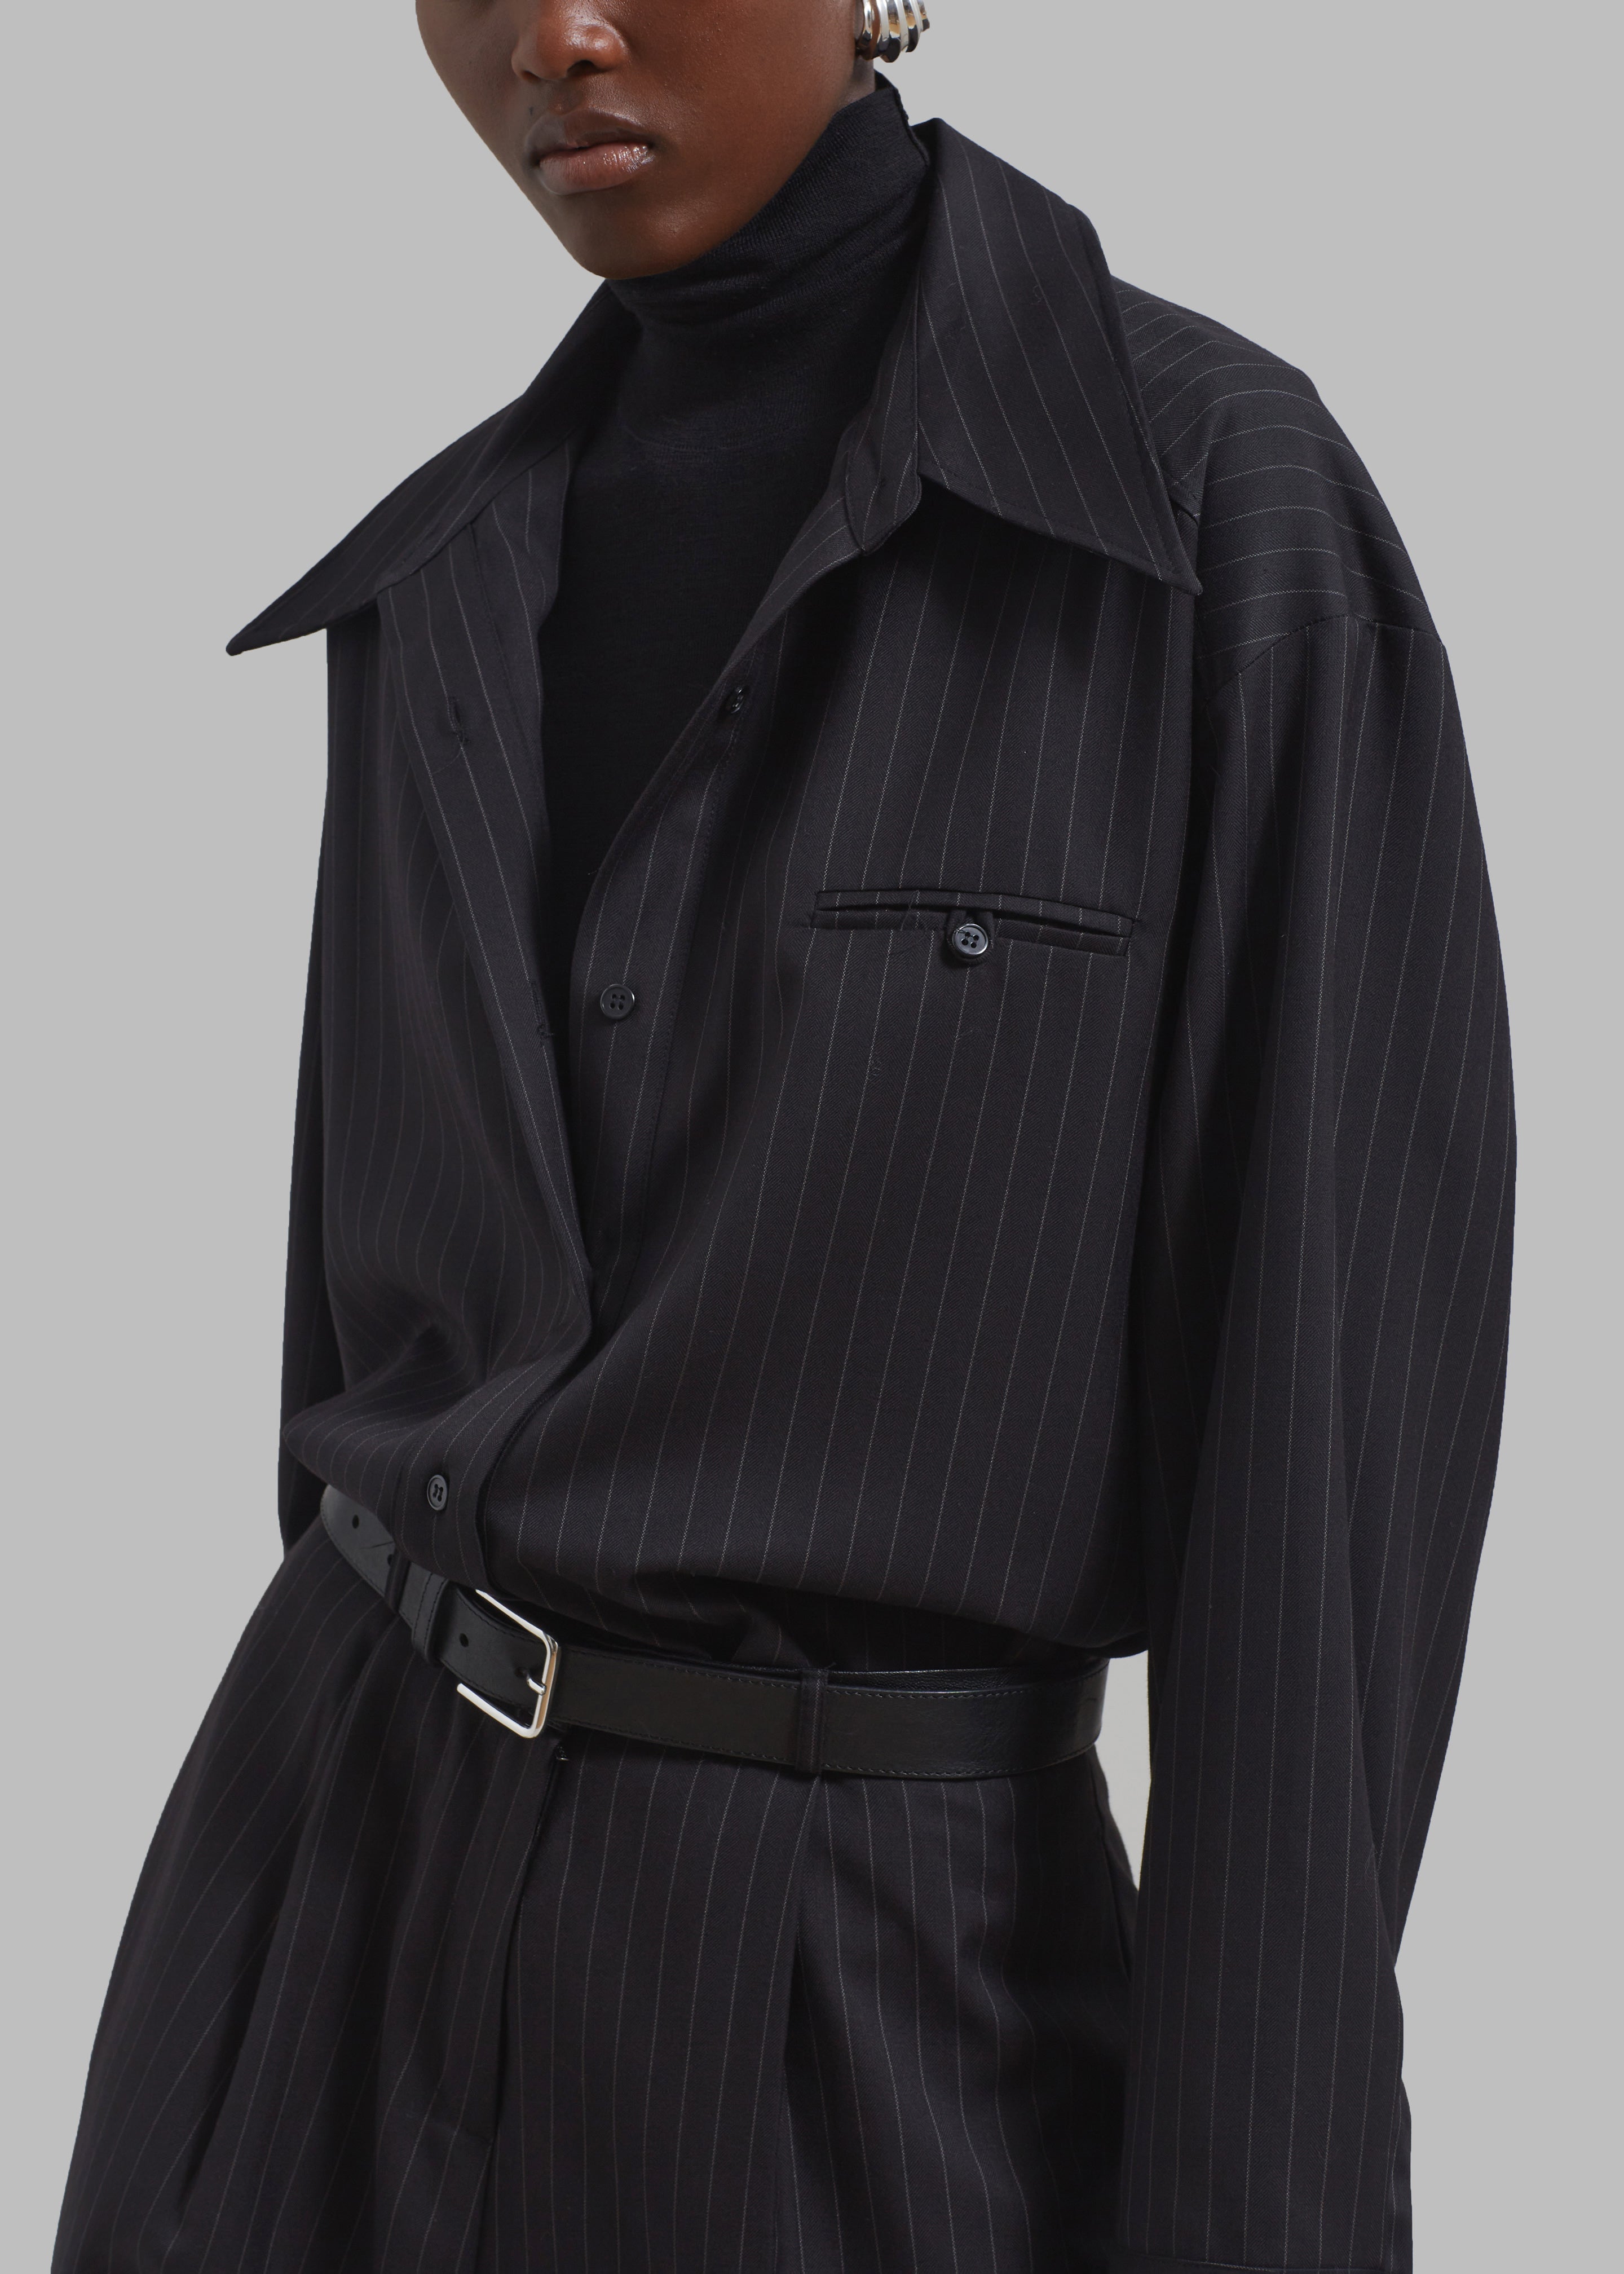 Kerry Button Up Shirt - Black Pinstripe - 5